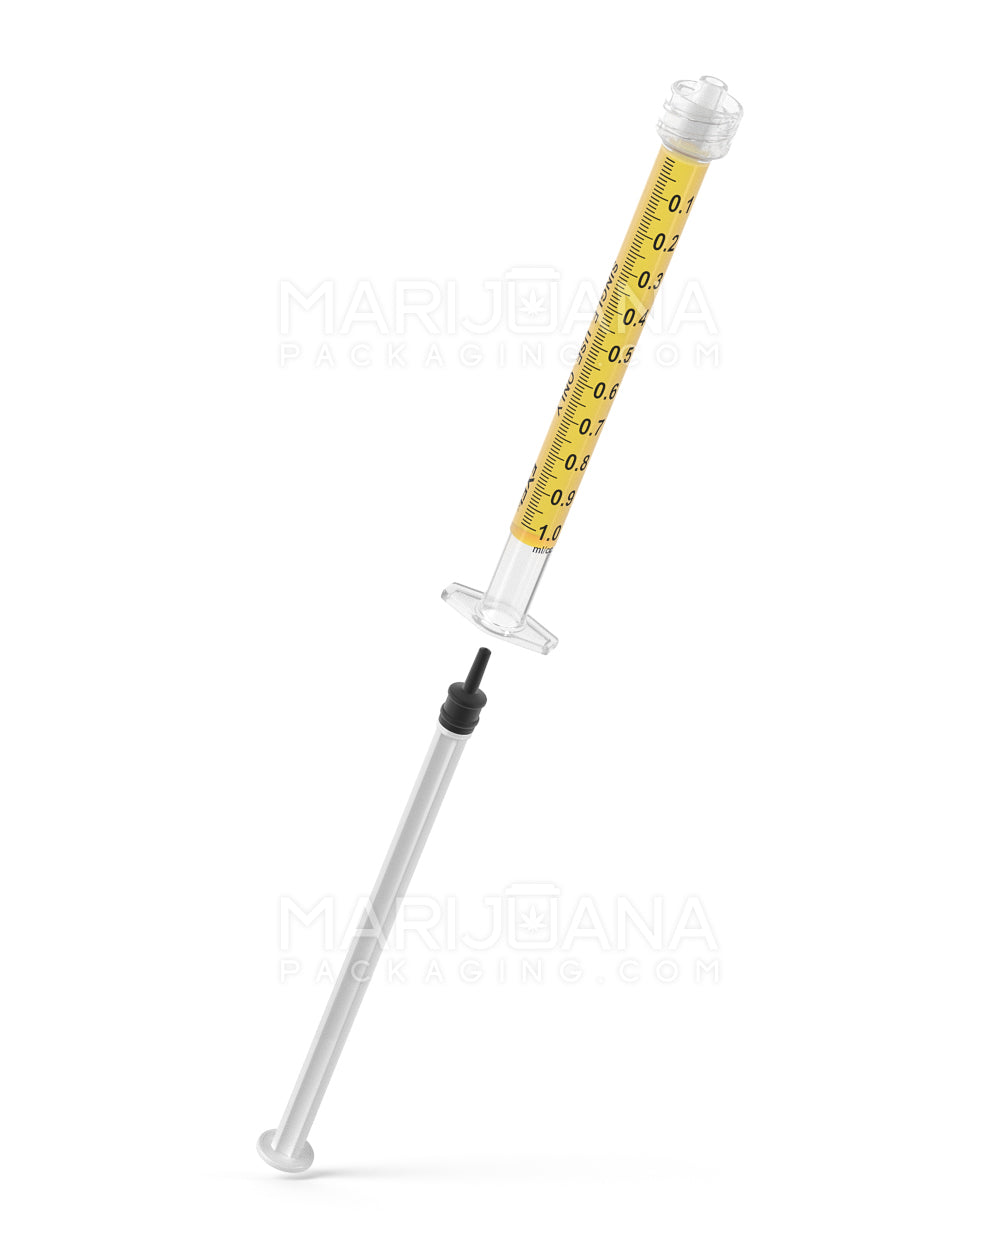 Luer Lock | Plastic Dab Applicator Syringes | 1mL - 0.1mL Increments - 100 Count - 7